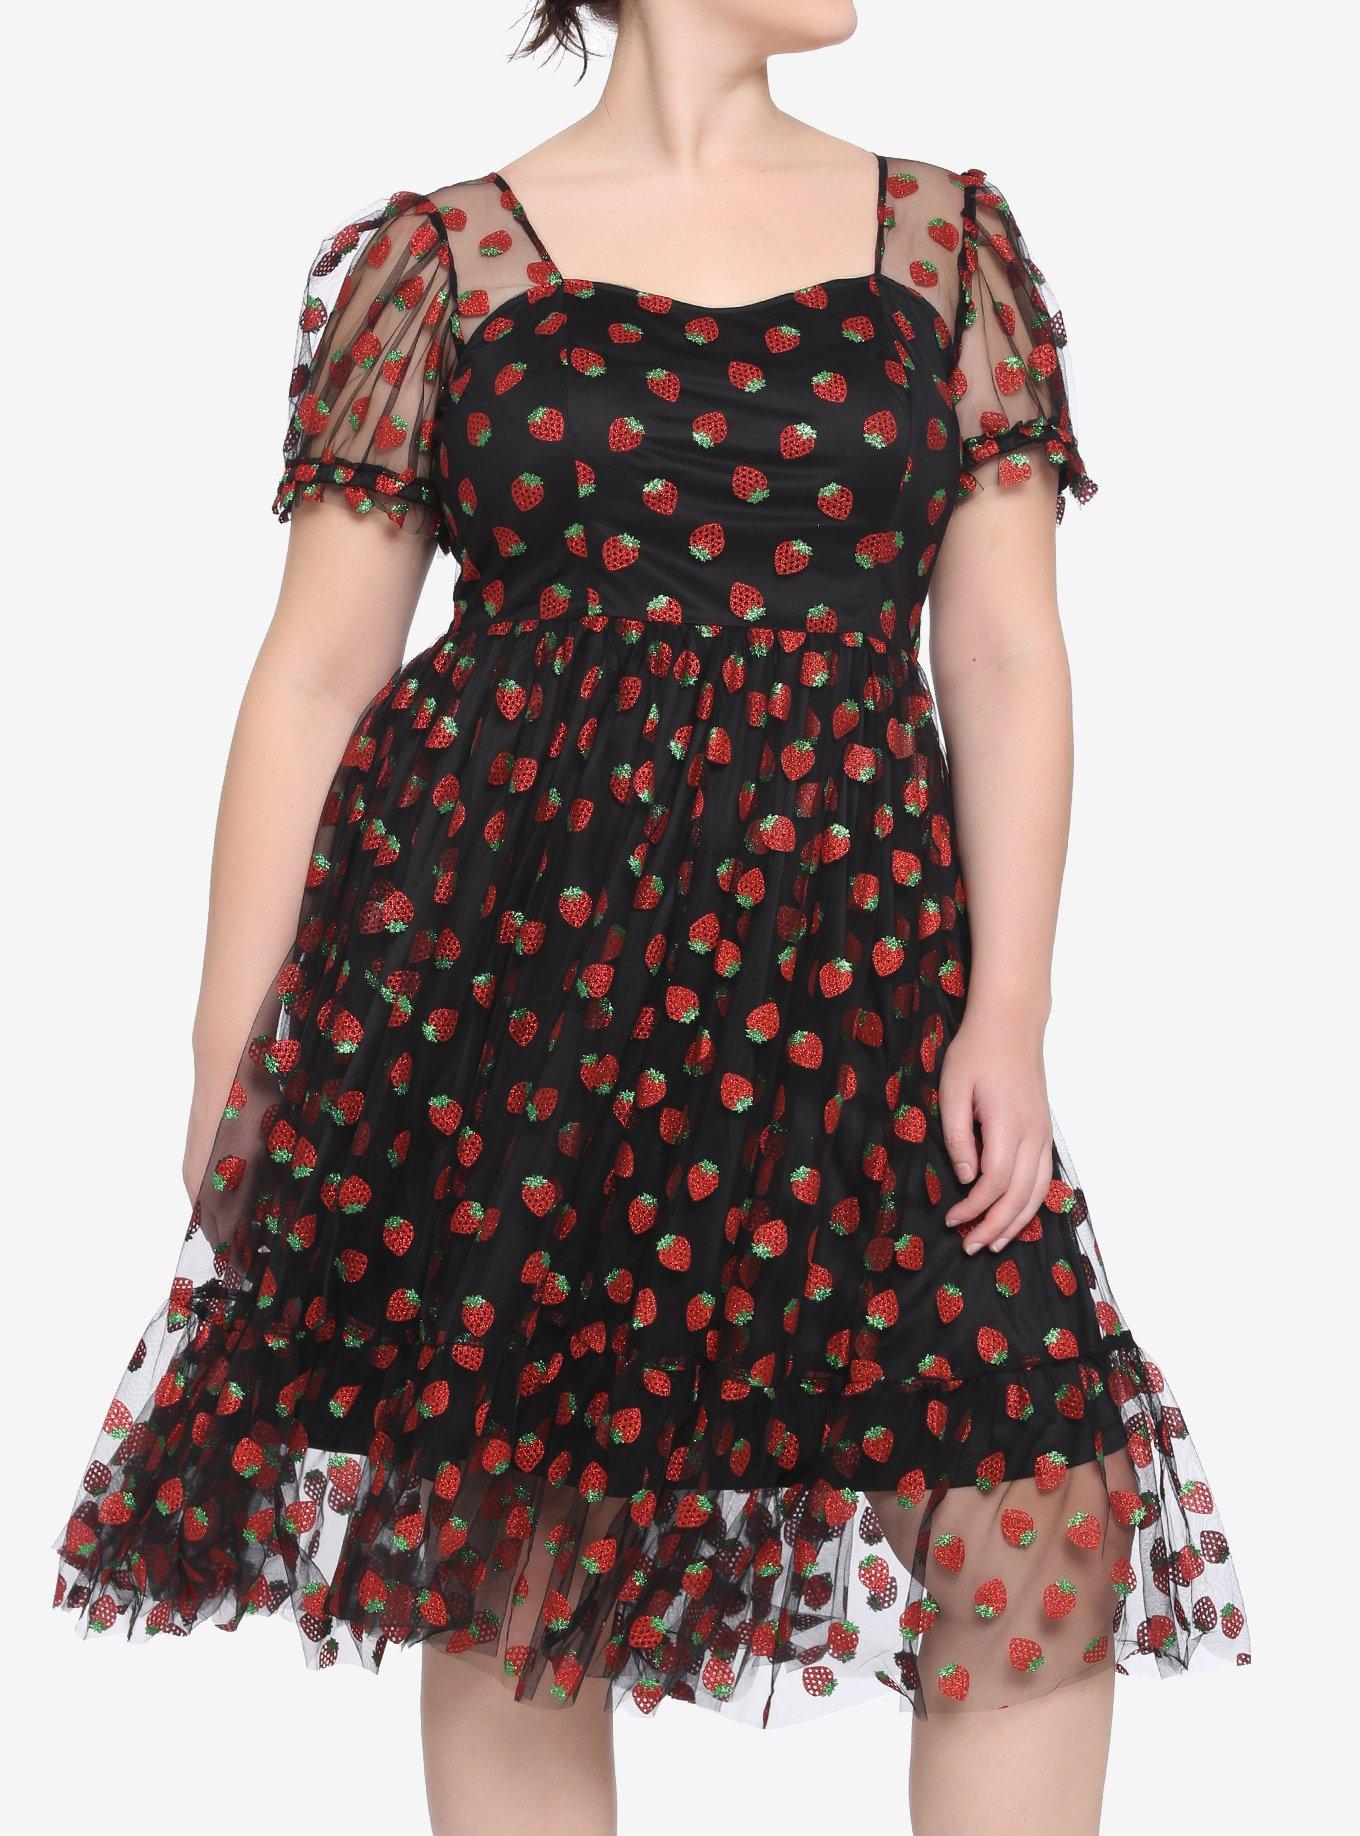 Strawberry Glitter Mesh Dress Plus Size